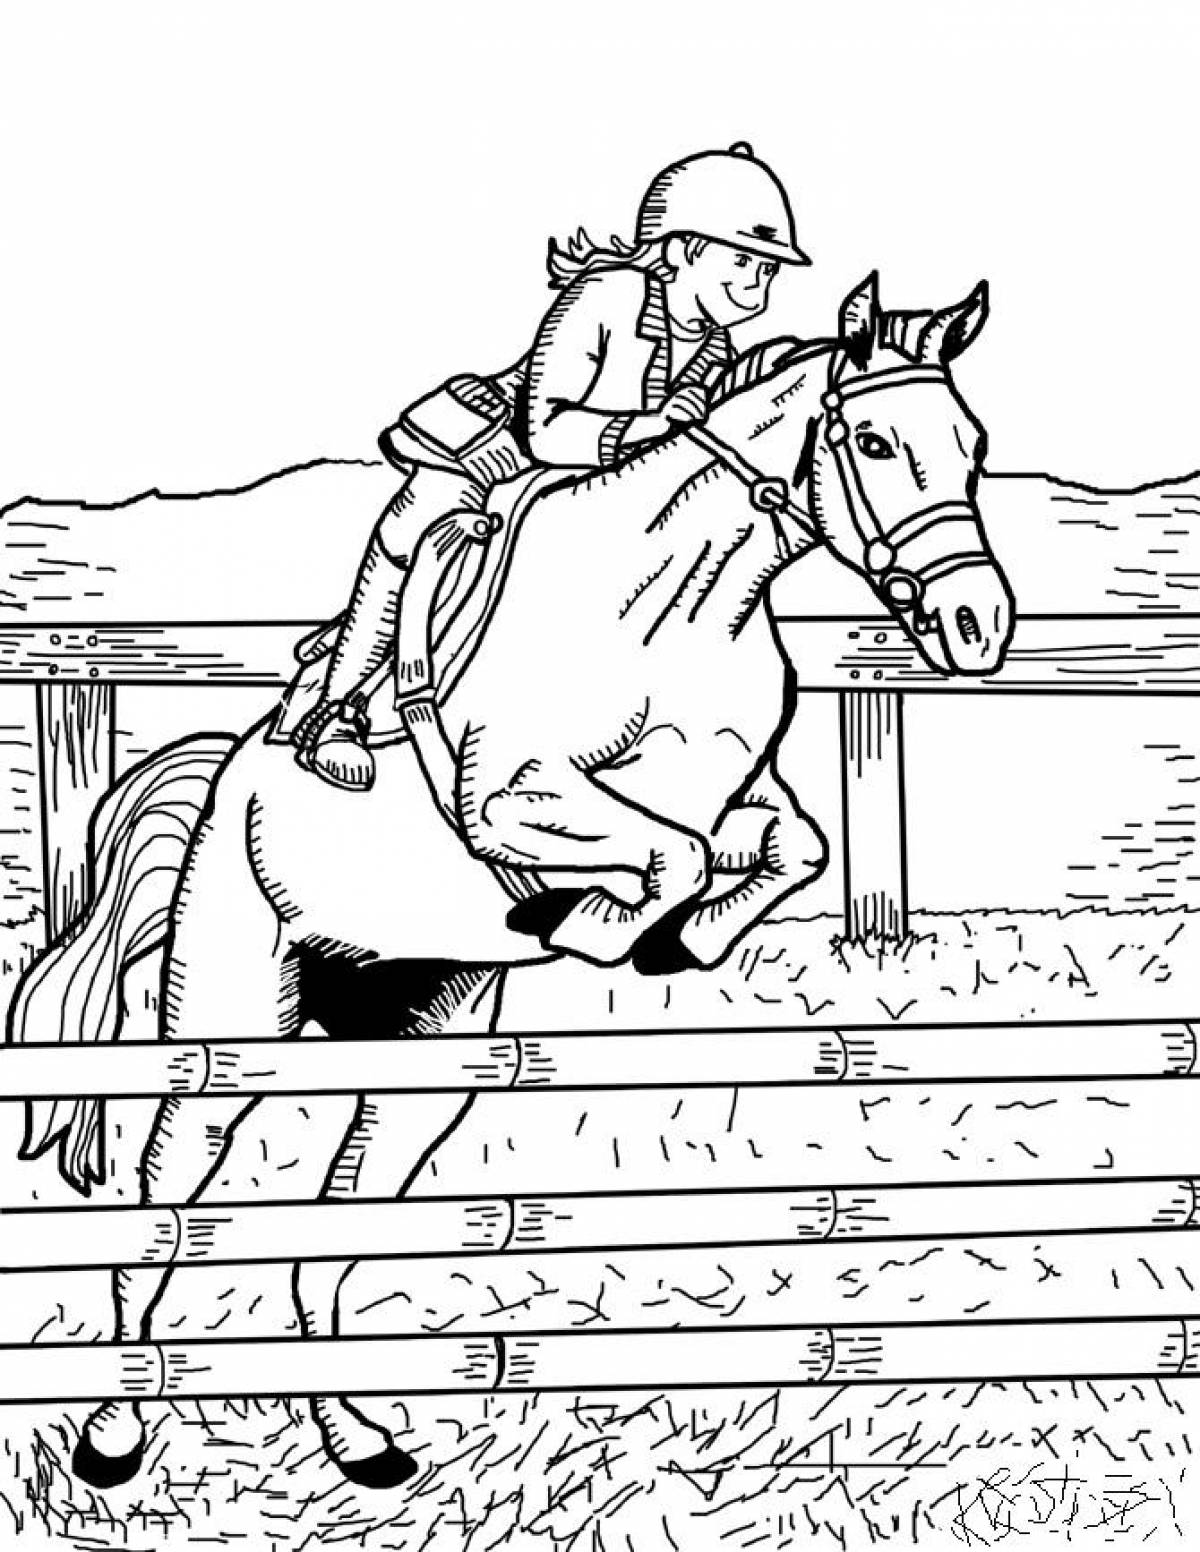 Horseback riding